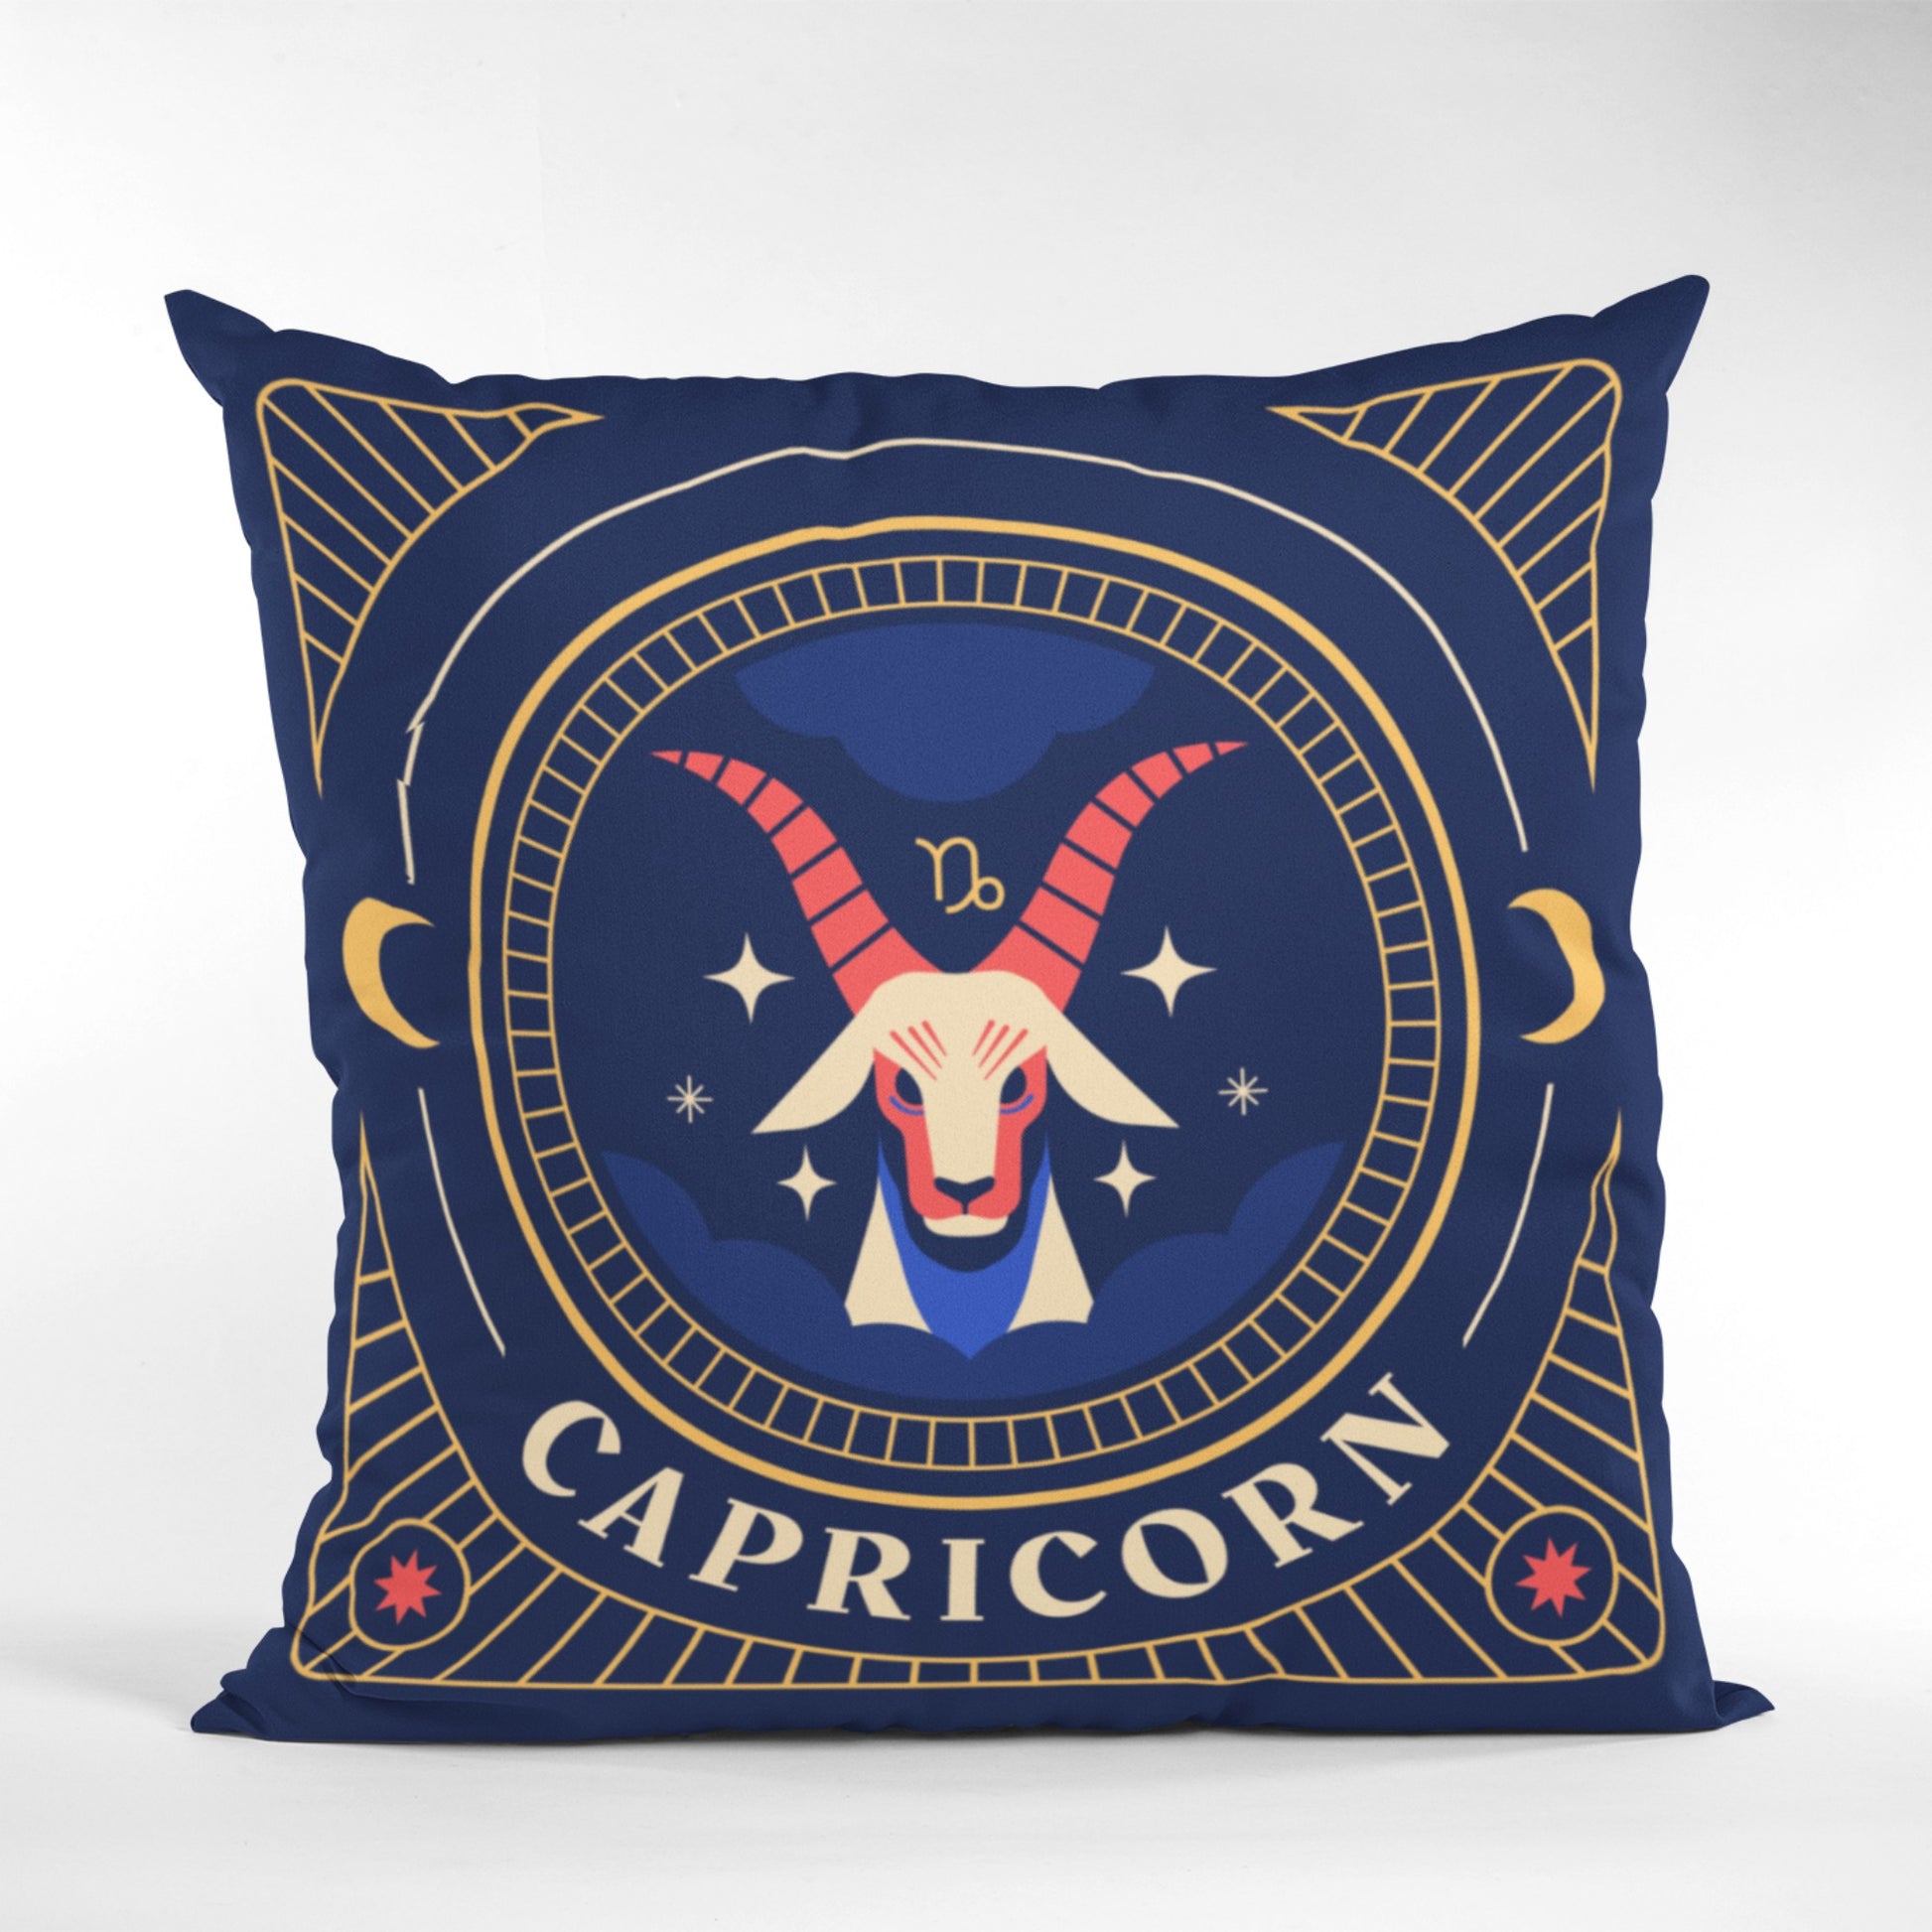 Capricorn Astrology Throw Pillow